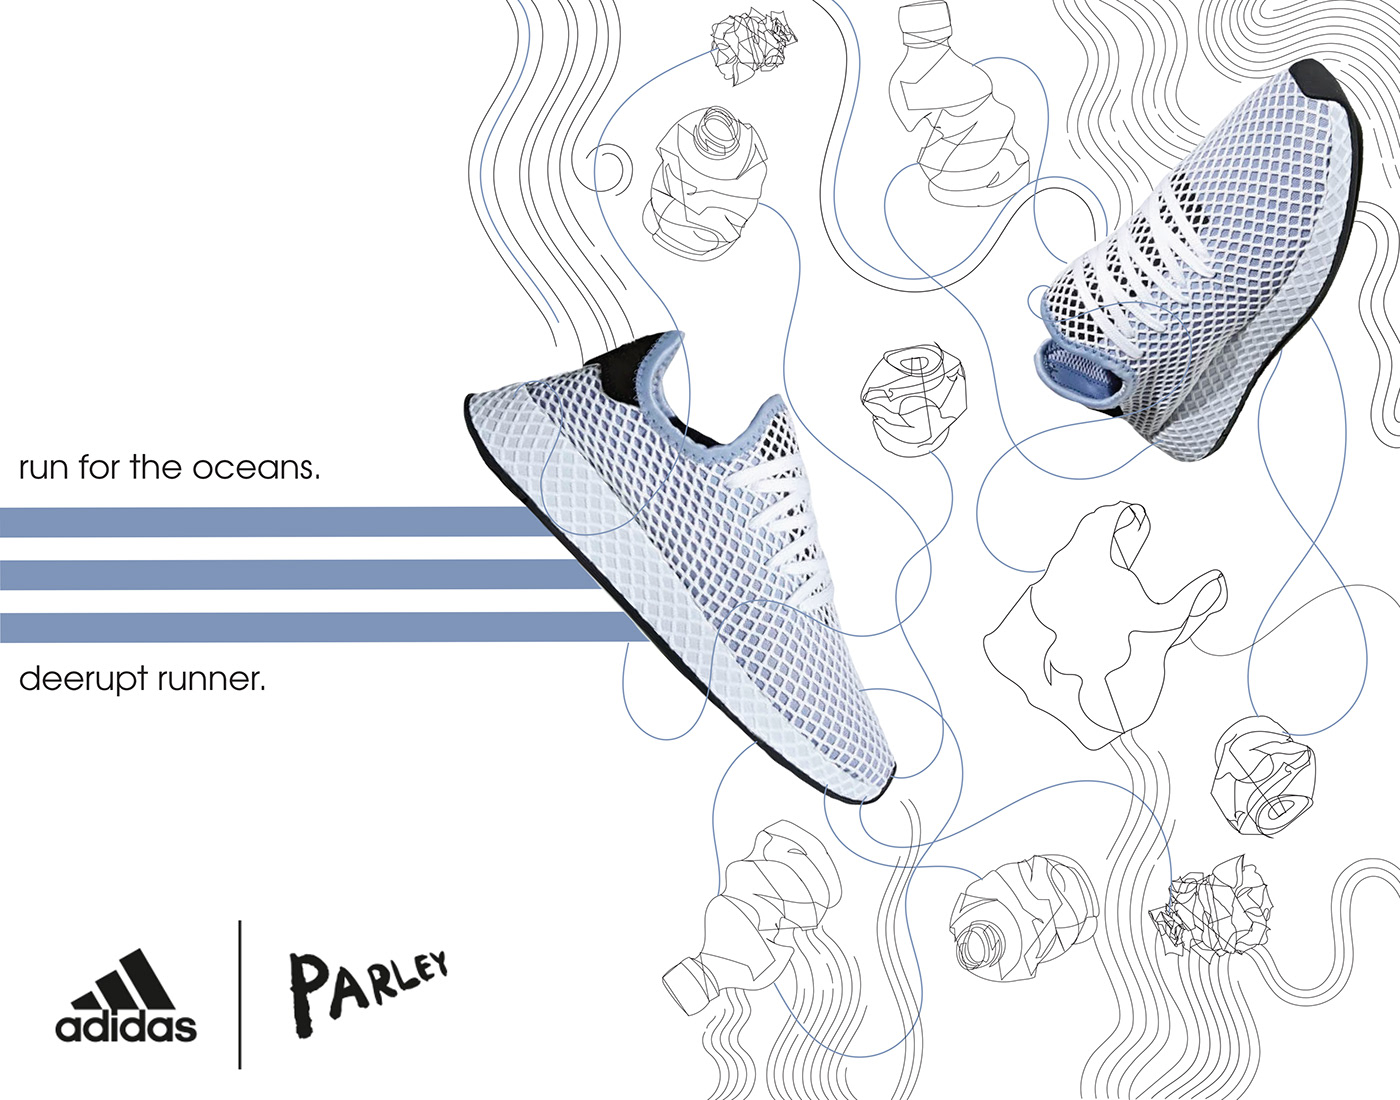 adidas parley Collaboration running branding  Brand Design footwear Adidas x parley activewear sport